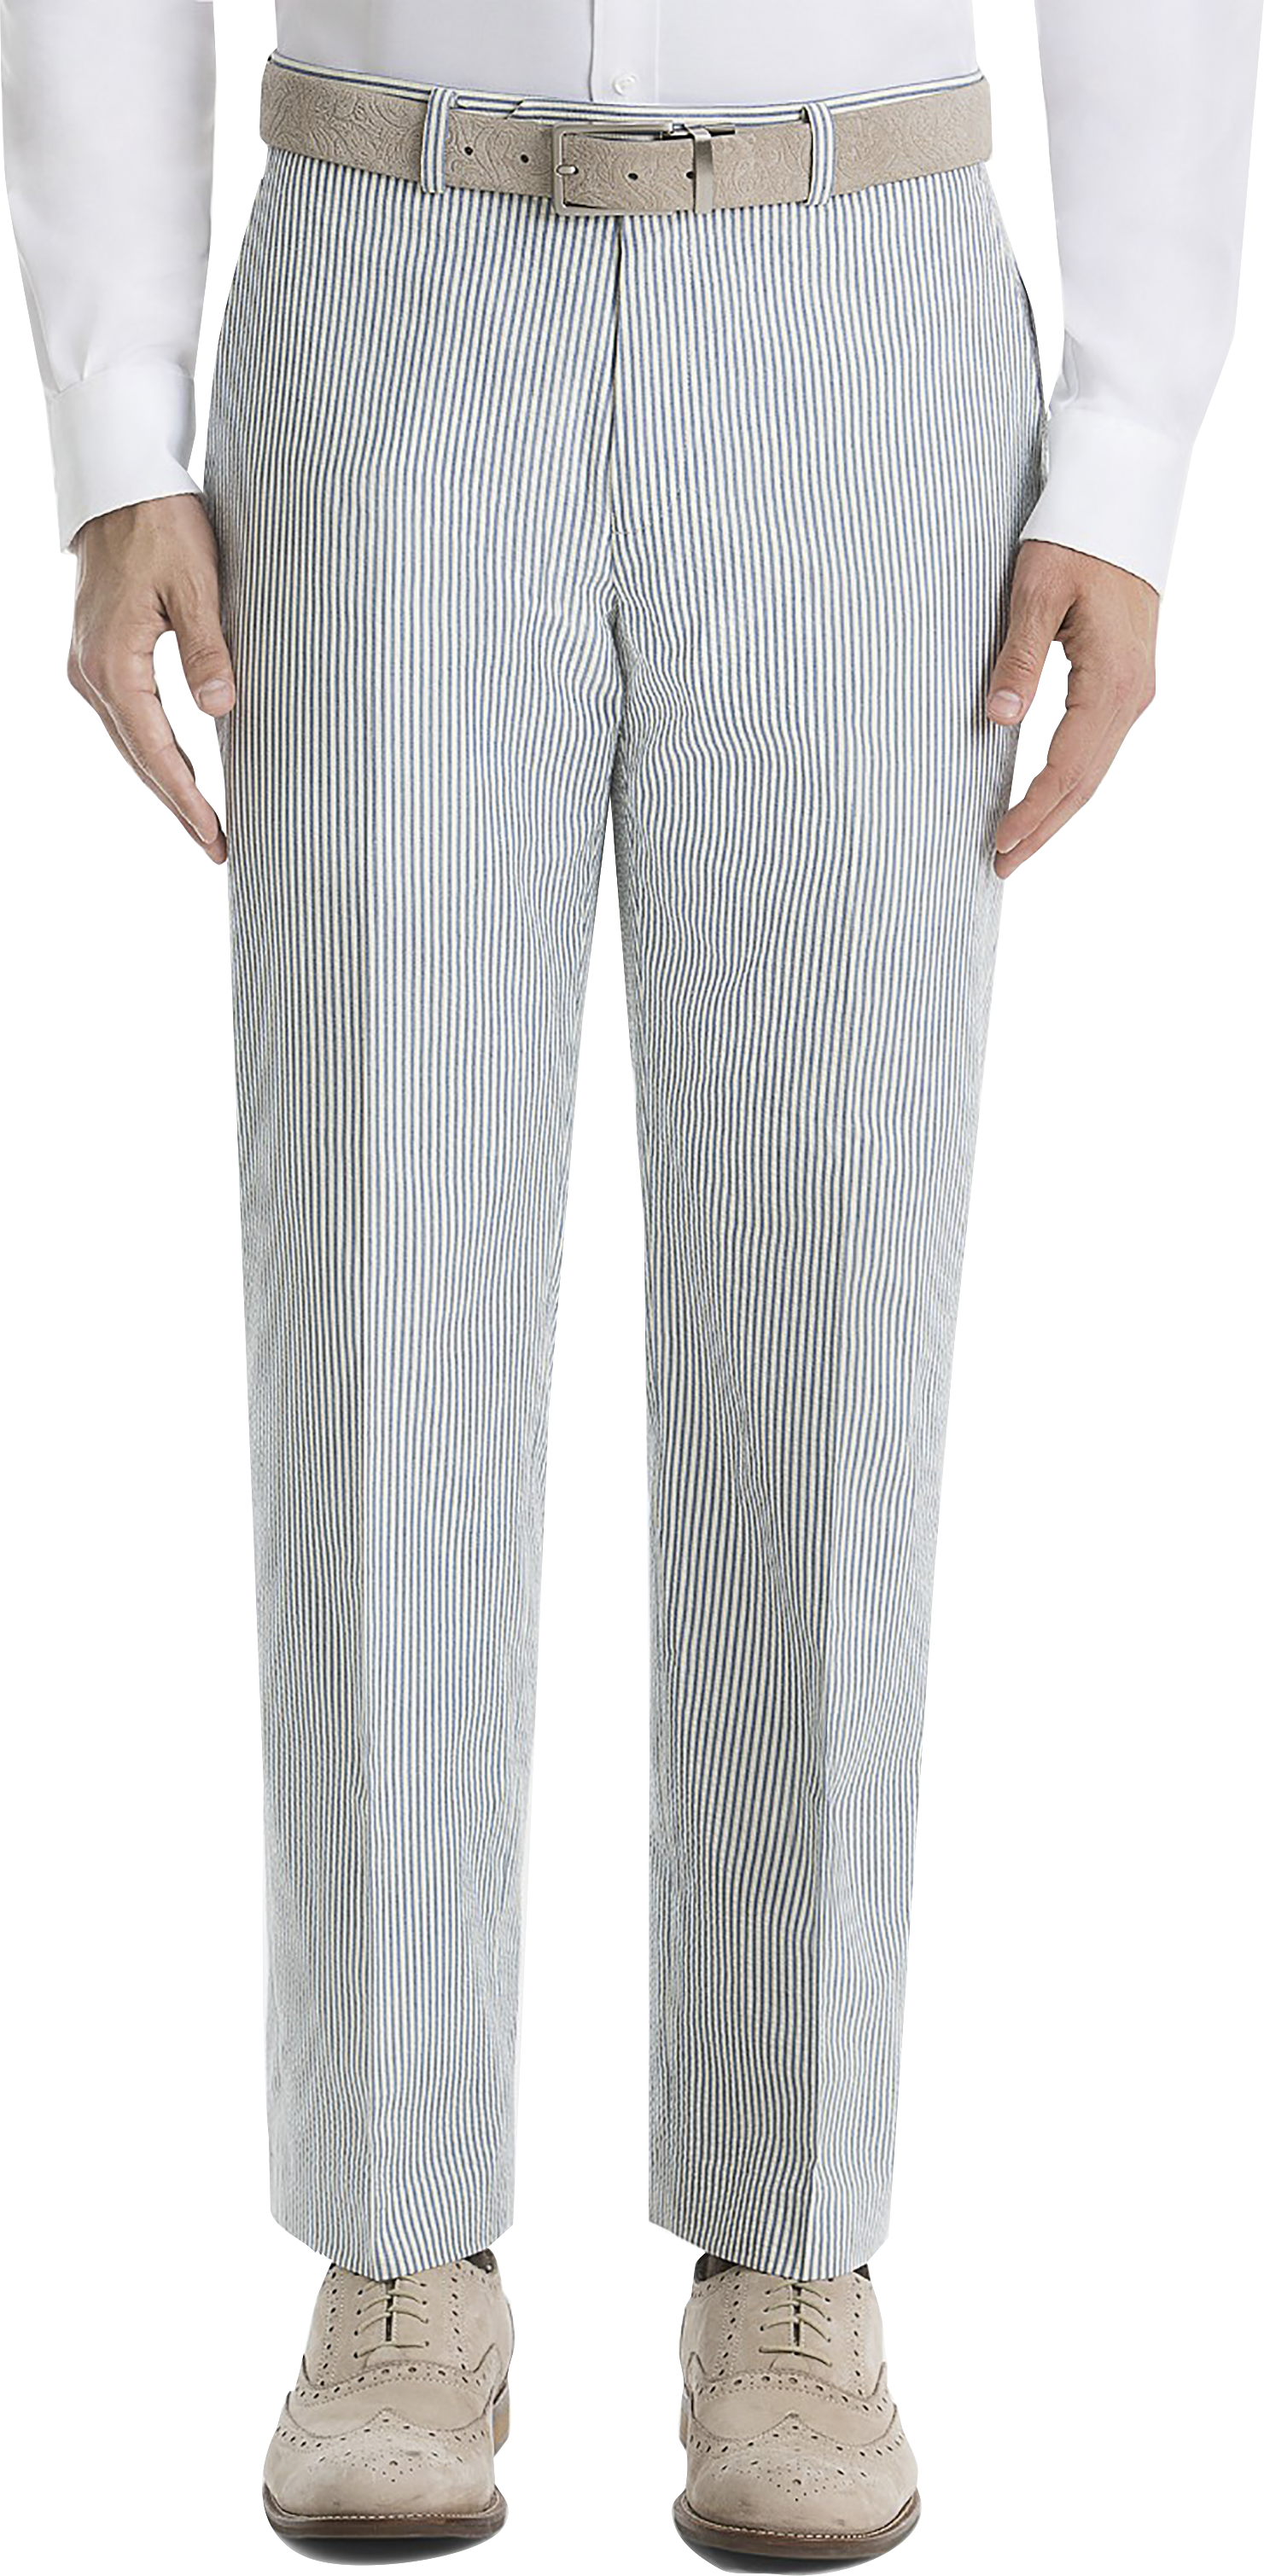 Lauren By Ralph Lauren Classic Fit Suit Separates Pants, Blue & White Seersucker